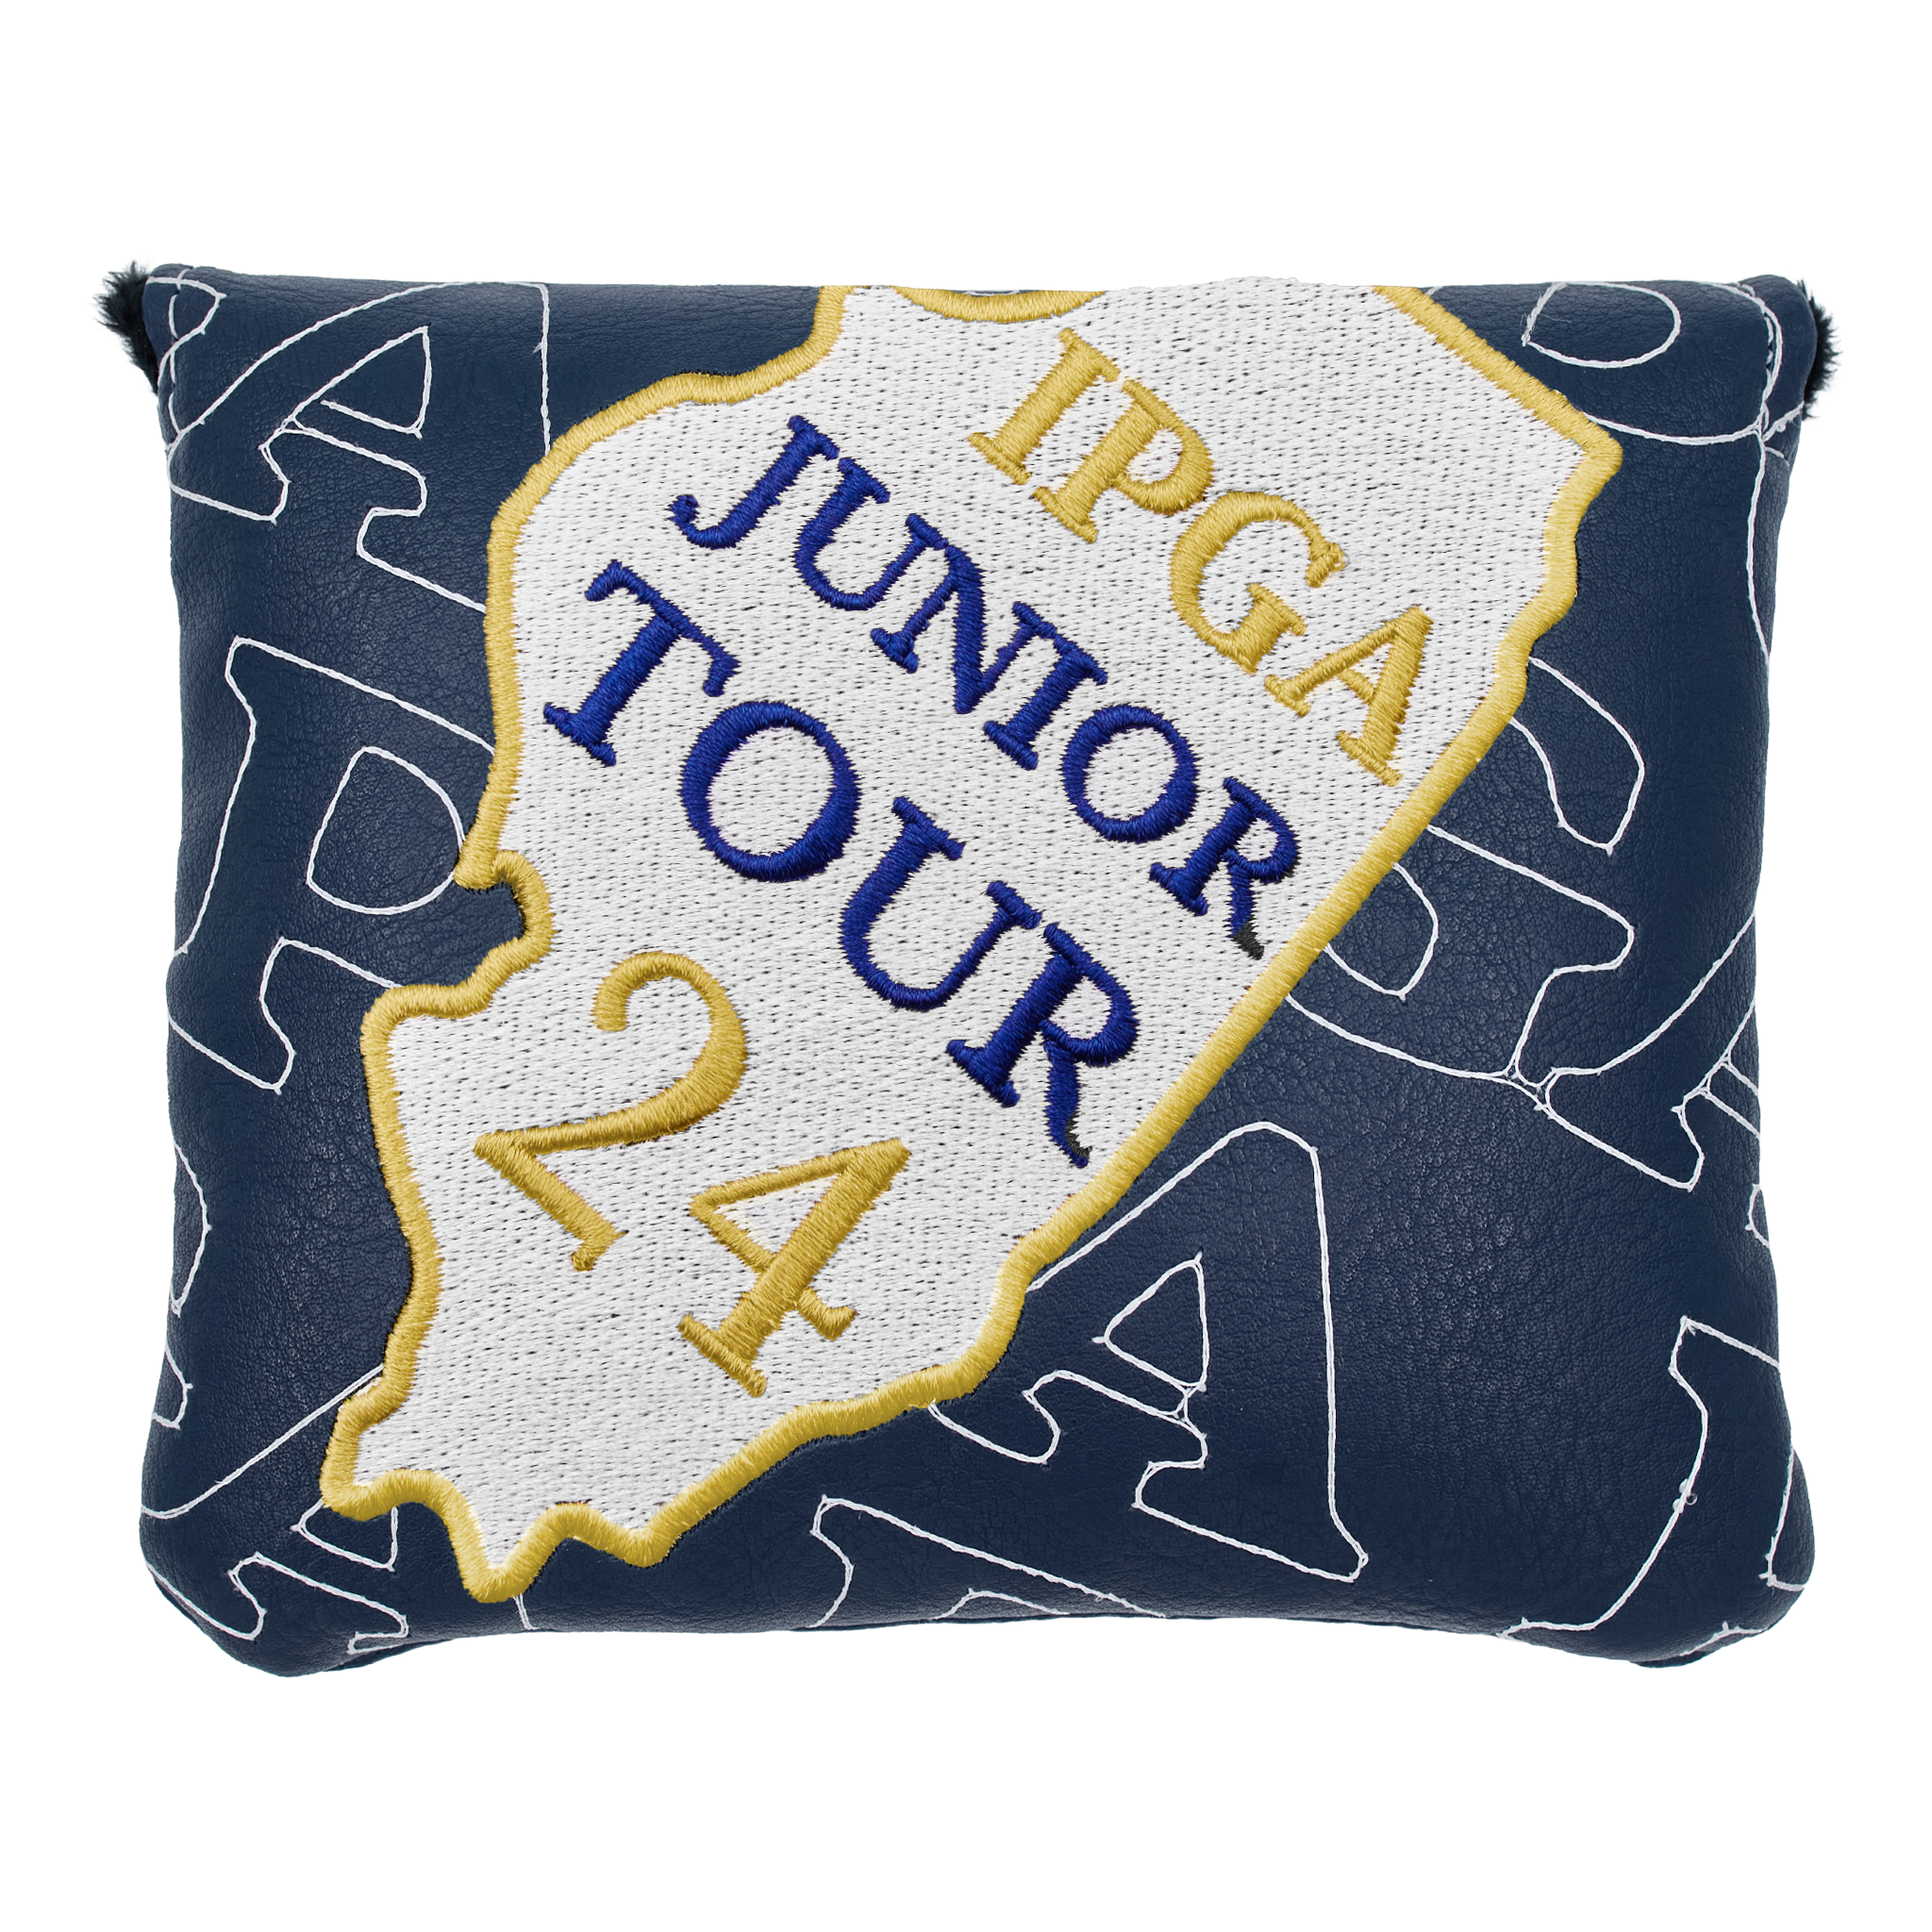 Illinois PGA Junior Tour Mallet Putter Headcover